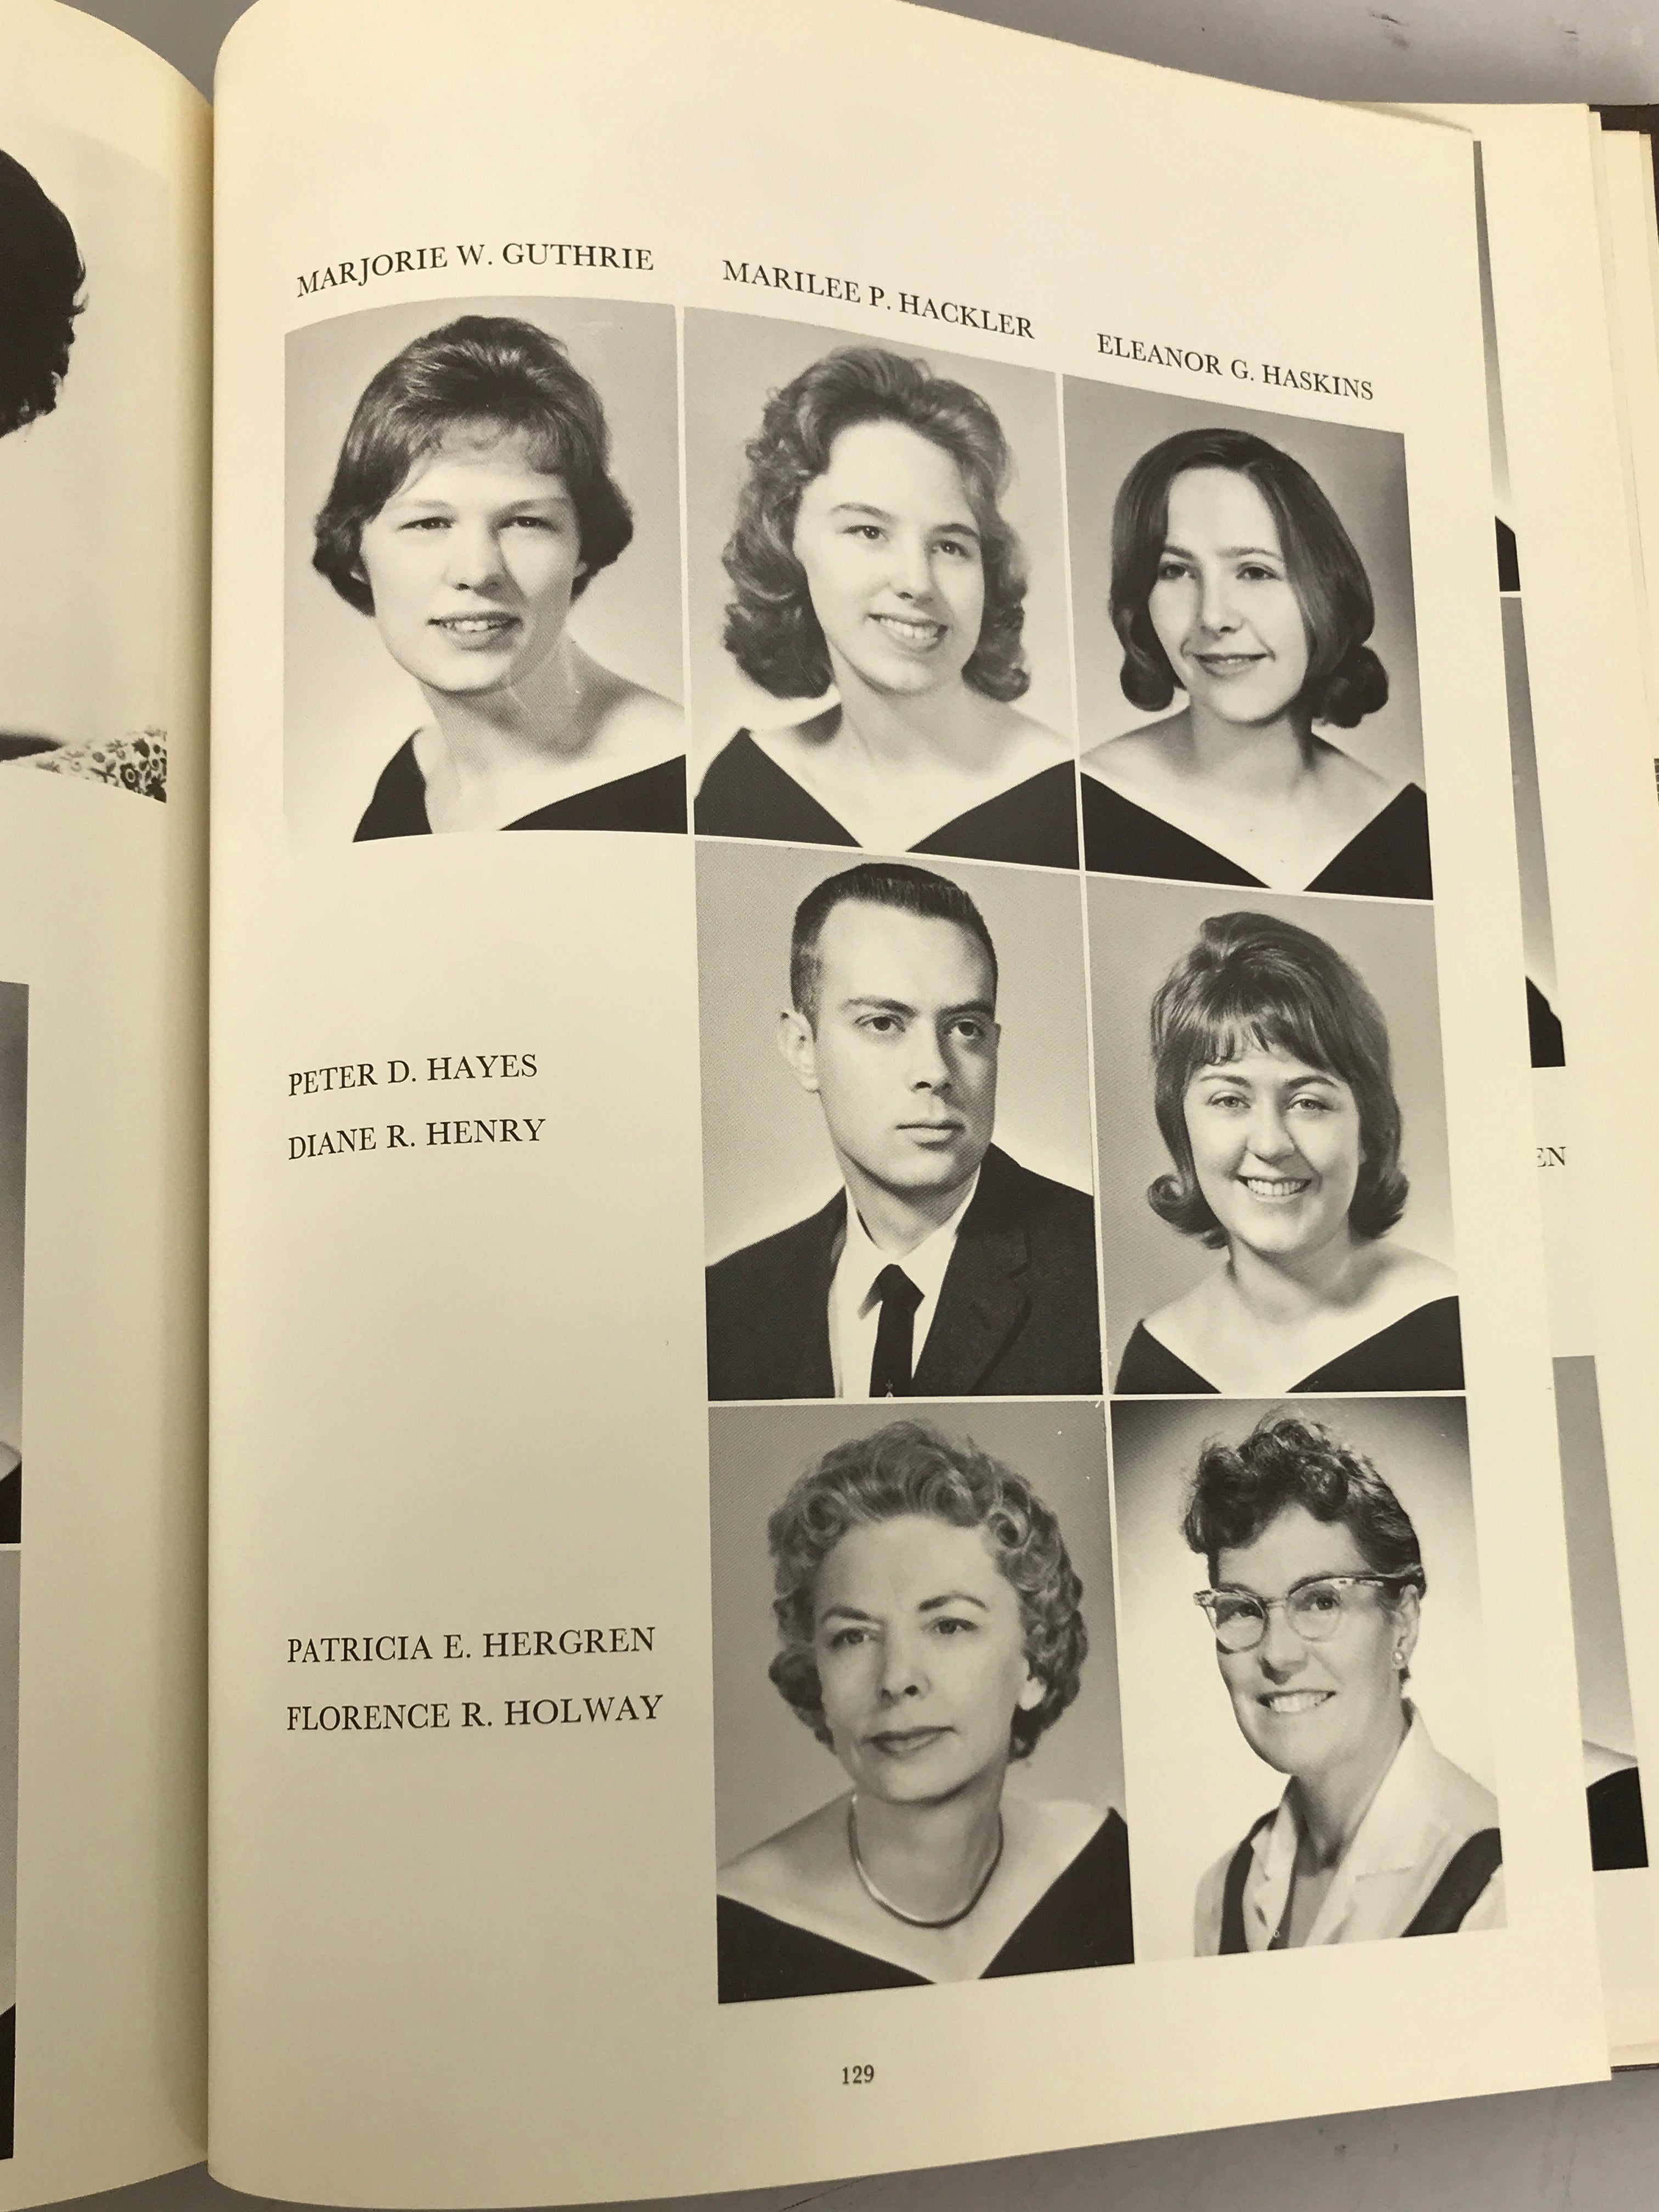 1964 Keene State College Yearbook Keene New Hampshire HC